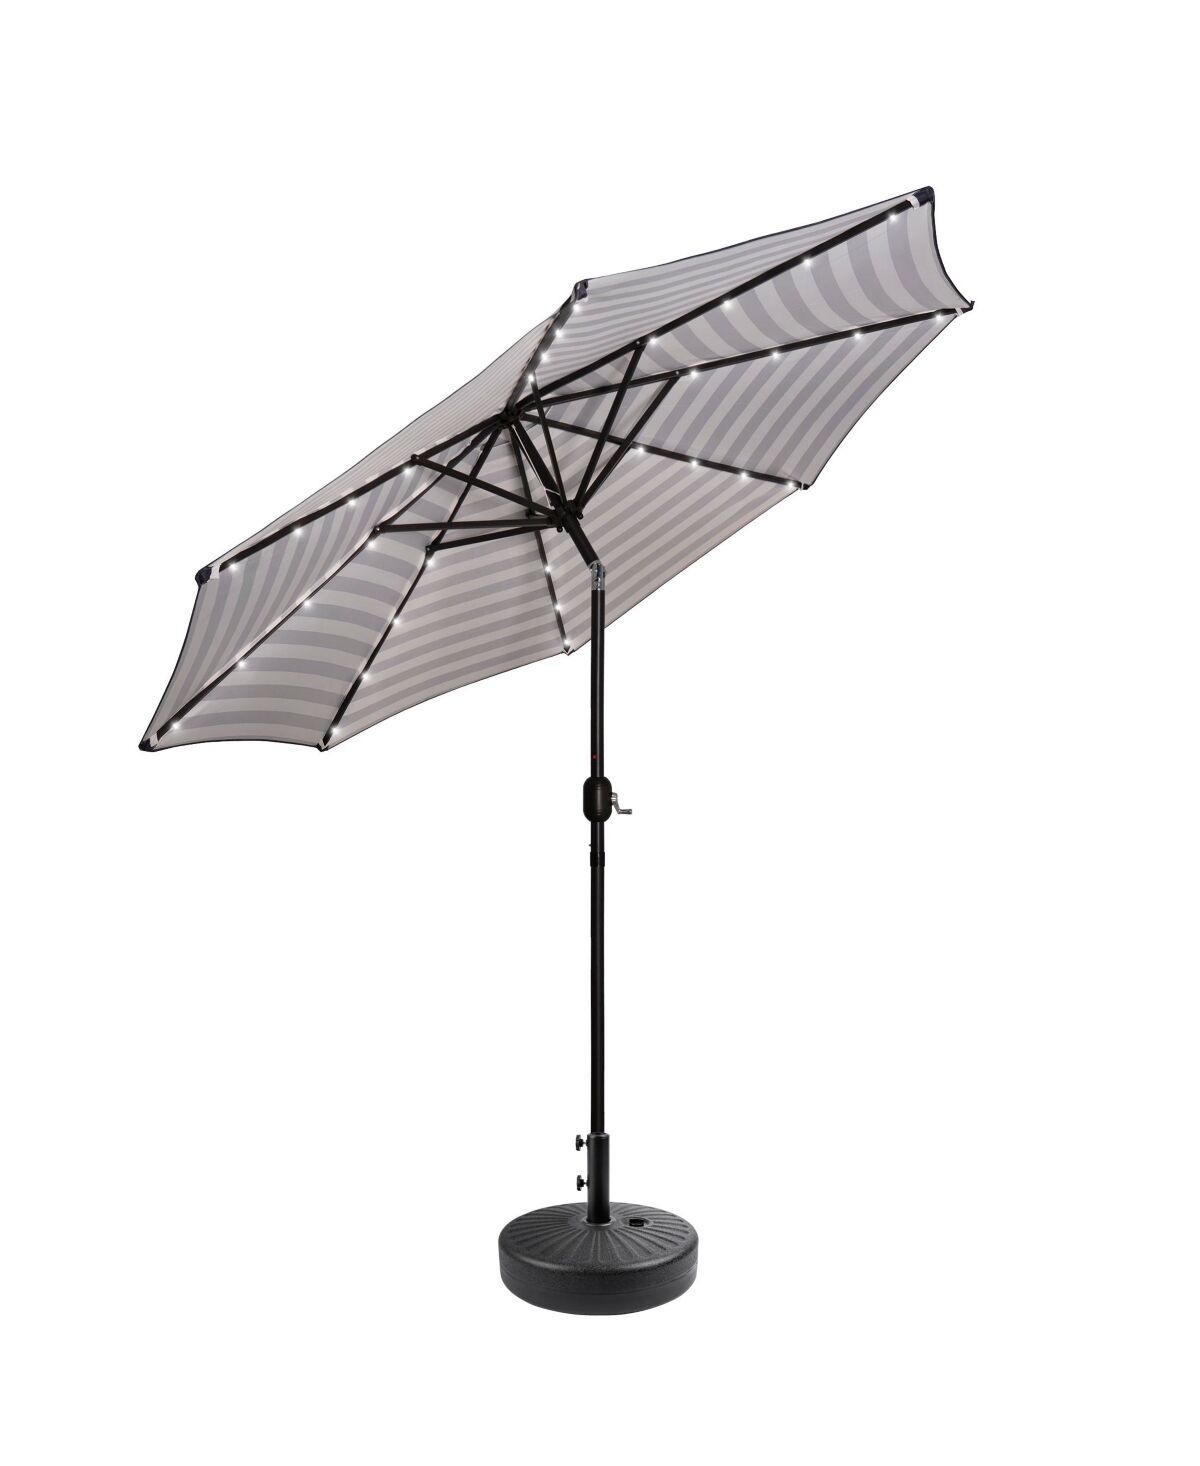 WestinTrends 9 ft. Patio Solar Power Led lights Market Umbrella with Black Round Base - Black White Stripe